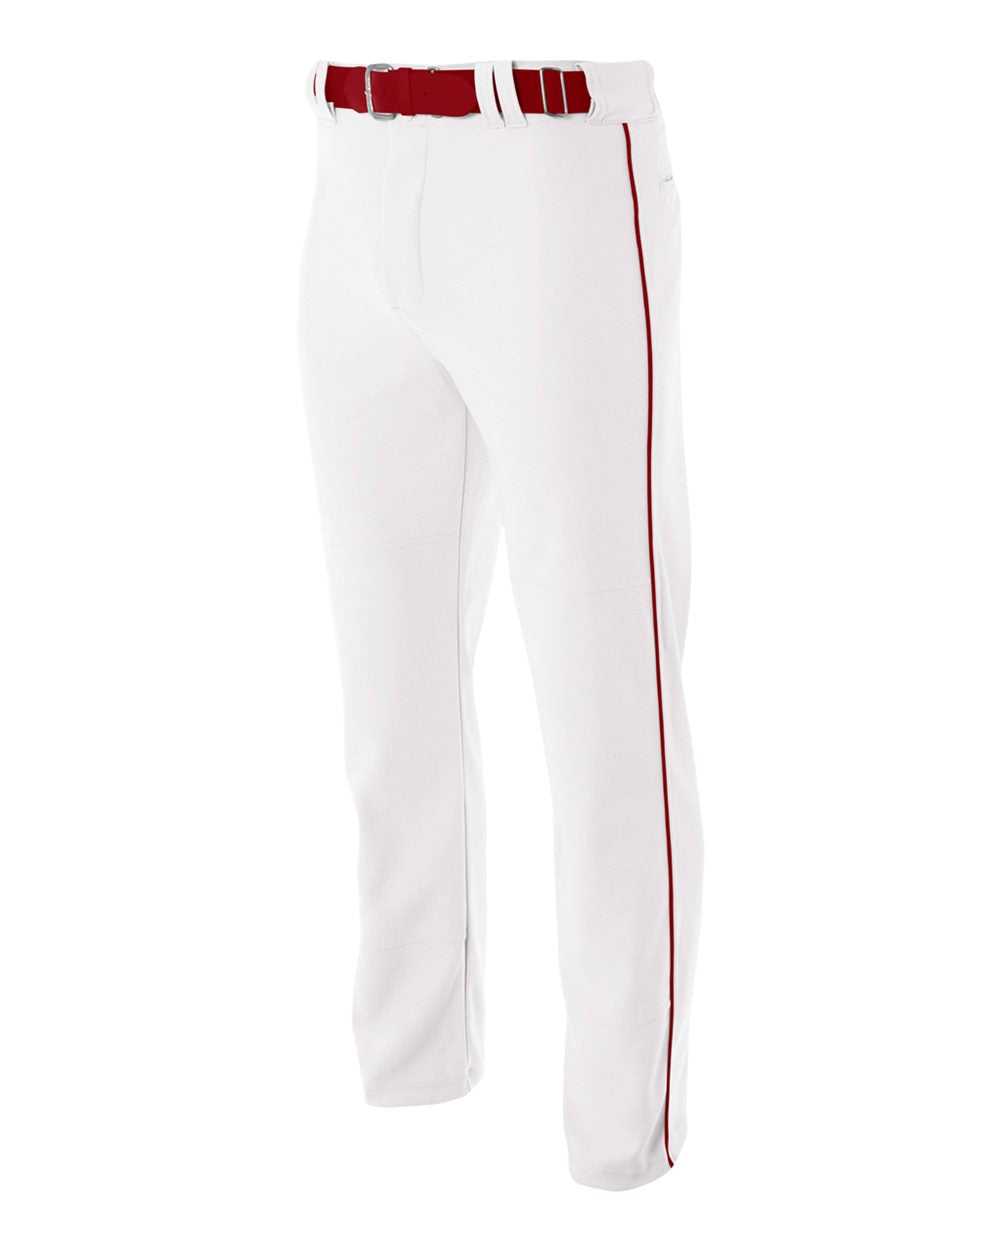 A4 N6162 Pro Style Open Bottom Baggy Cut Baseball Pant - White Cardinal - HIT a Double